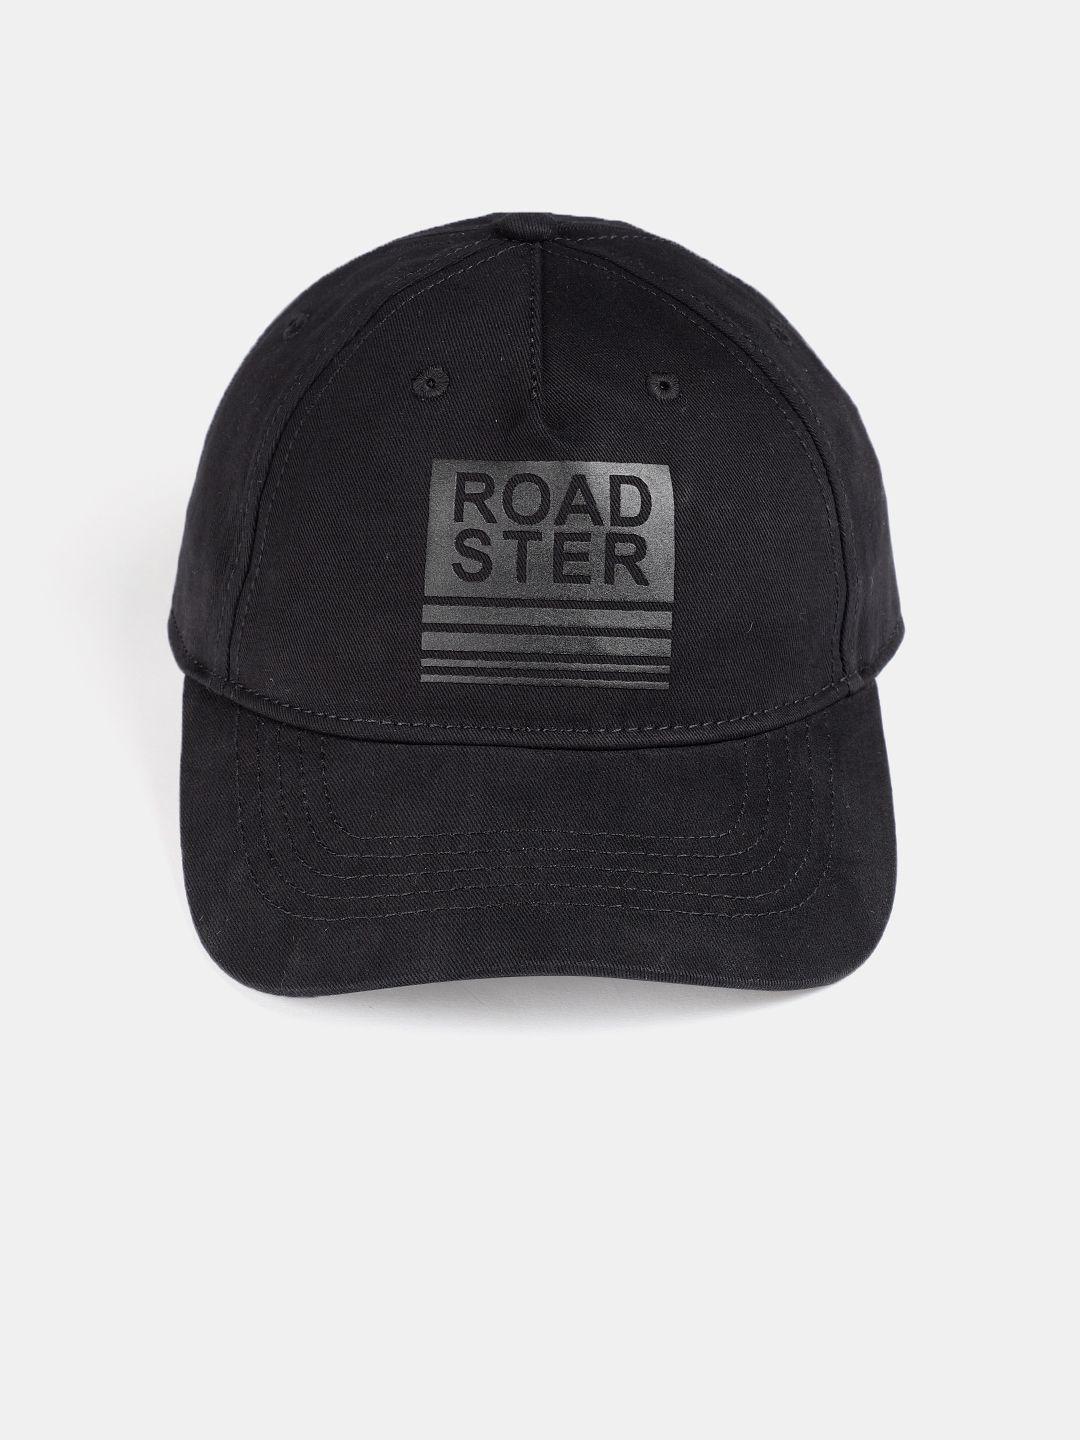 roadster unisex black printed baseball cap